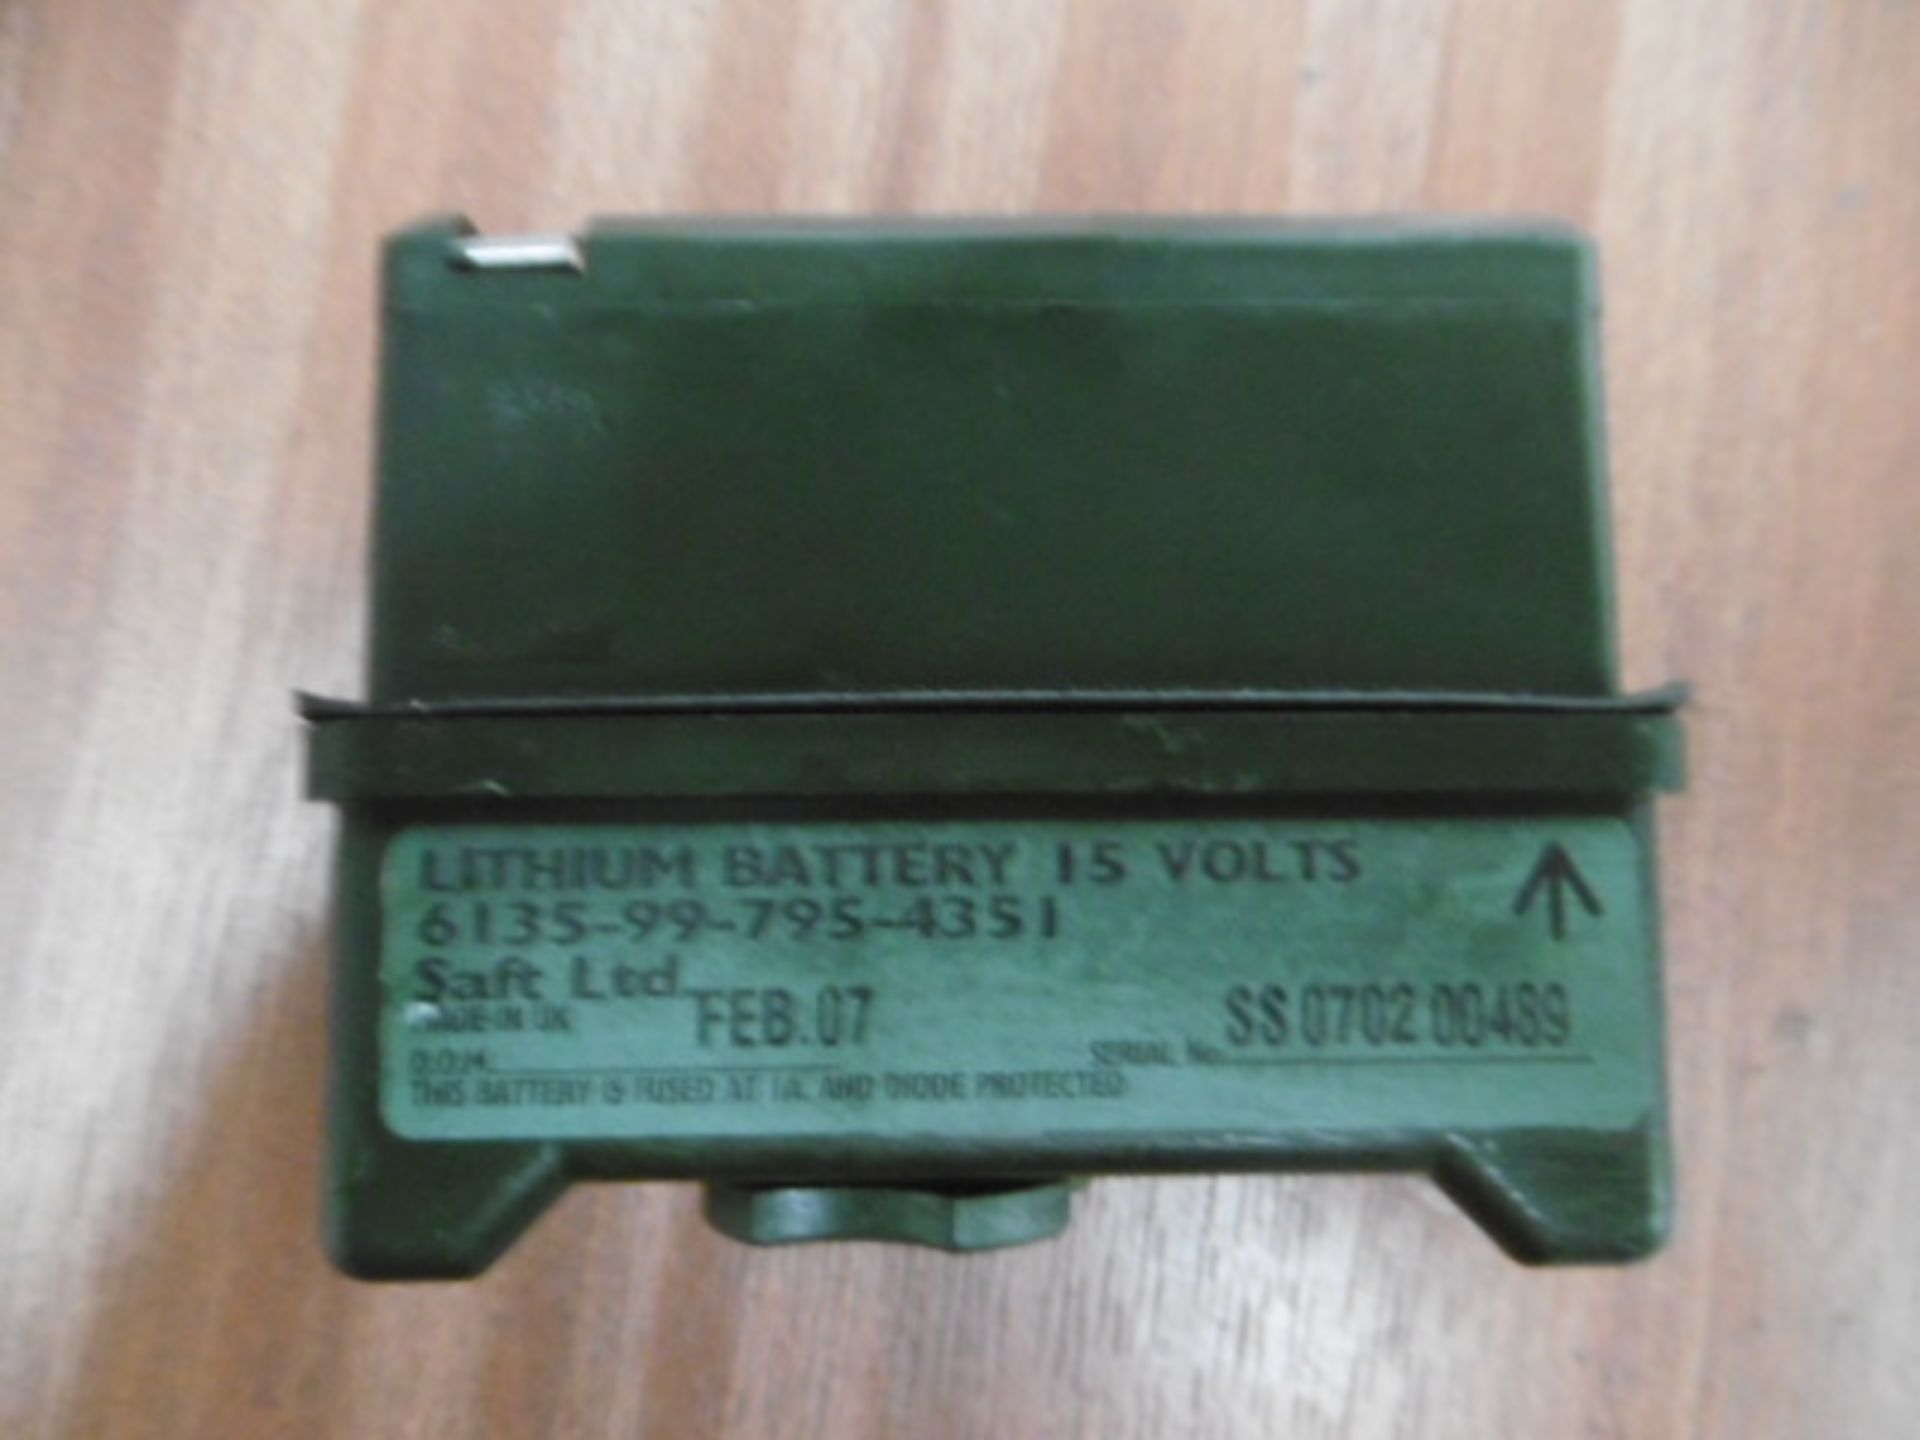 10 x Clansman 15V Lithium Batteries - Image 2 of 4